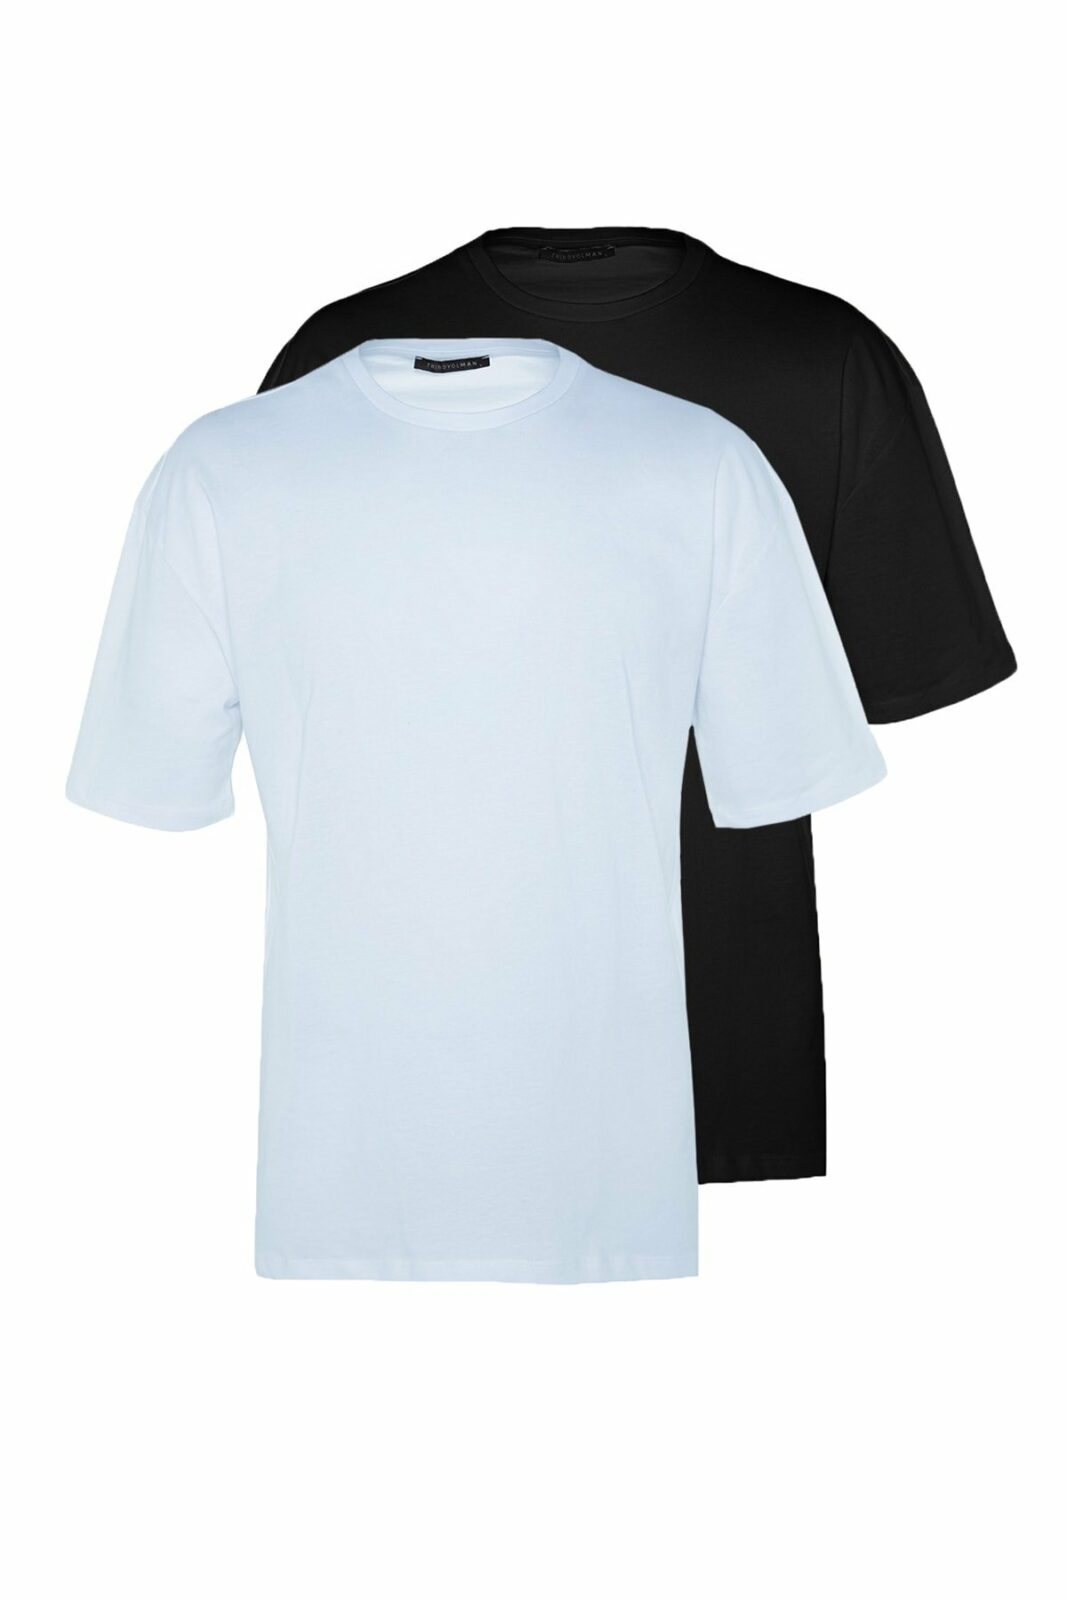 Trendyol T-Shirt - Multi-color -